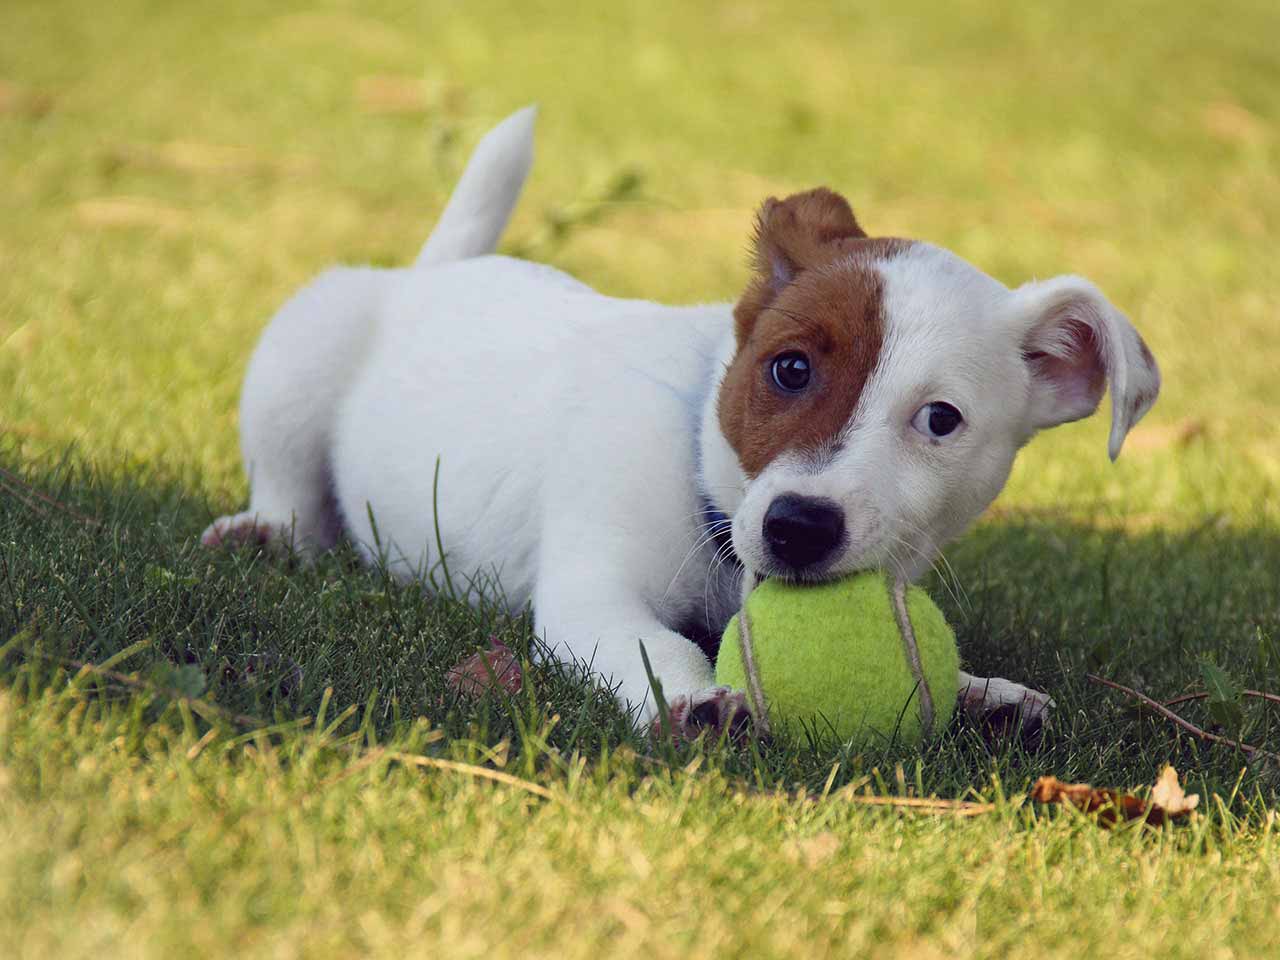 Dog playing a tennis ball game